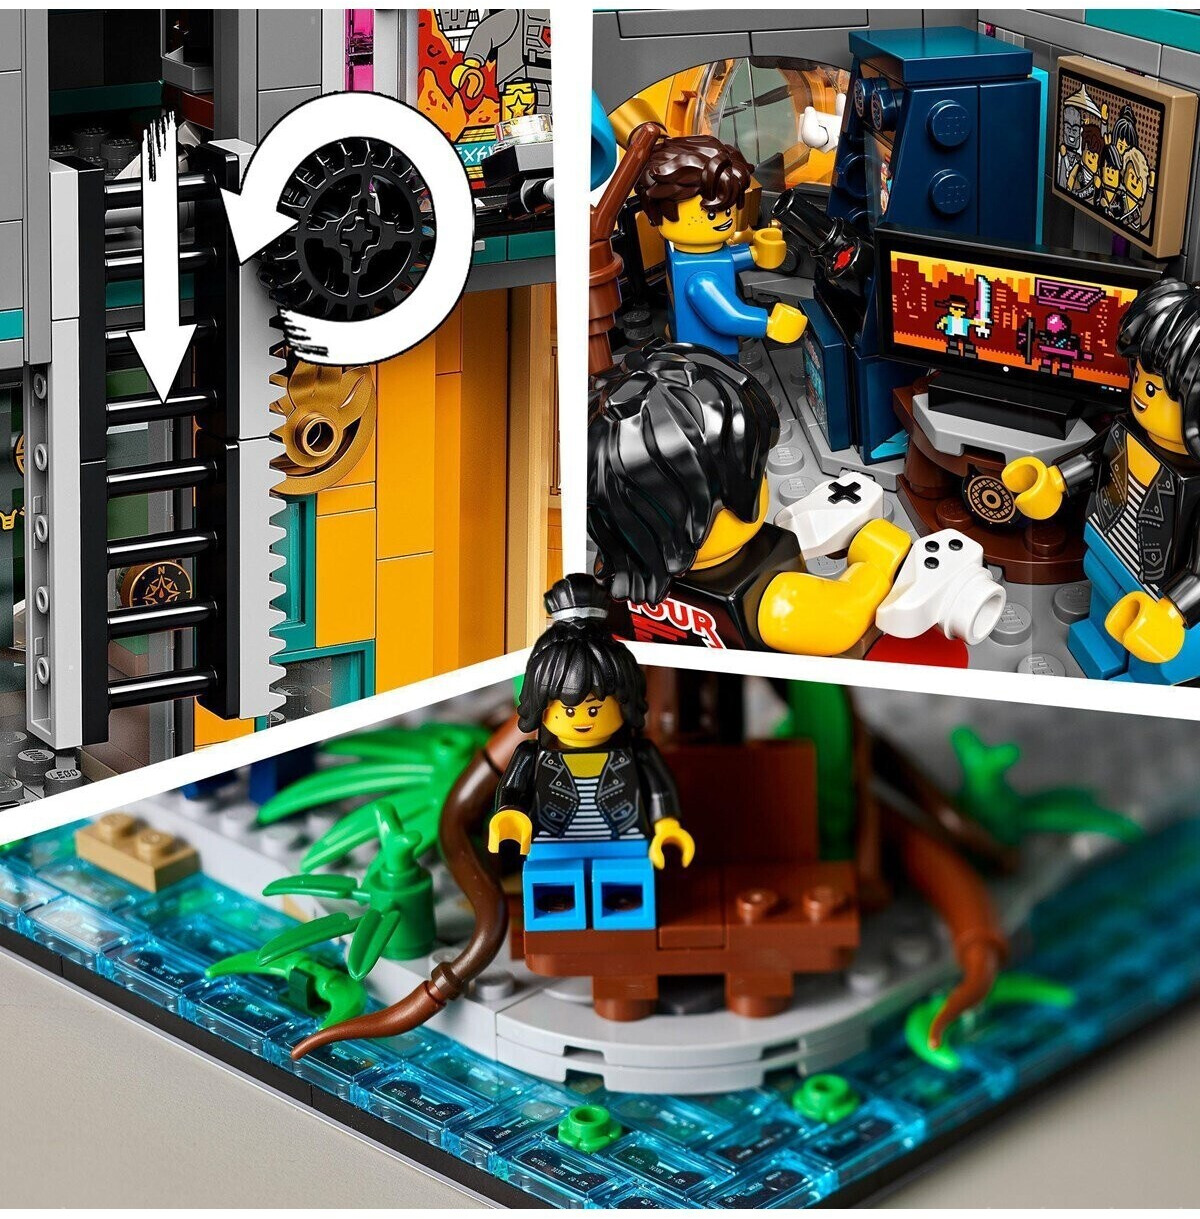 Best Buy: LEGO Ninjago NINJAGO City Gardens 71741 6332523